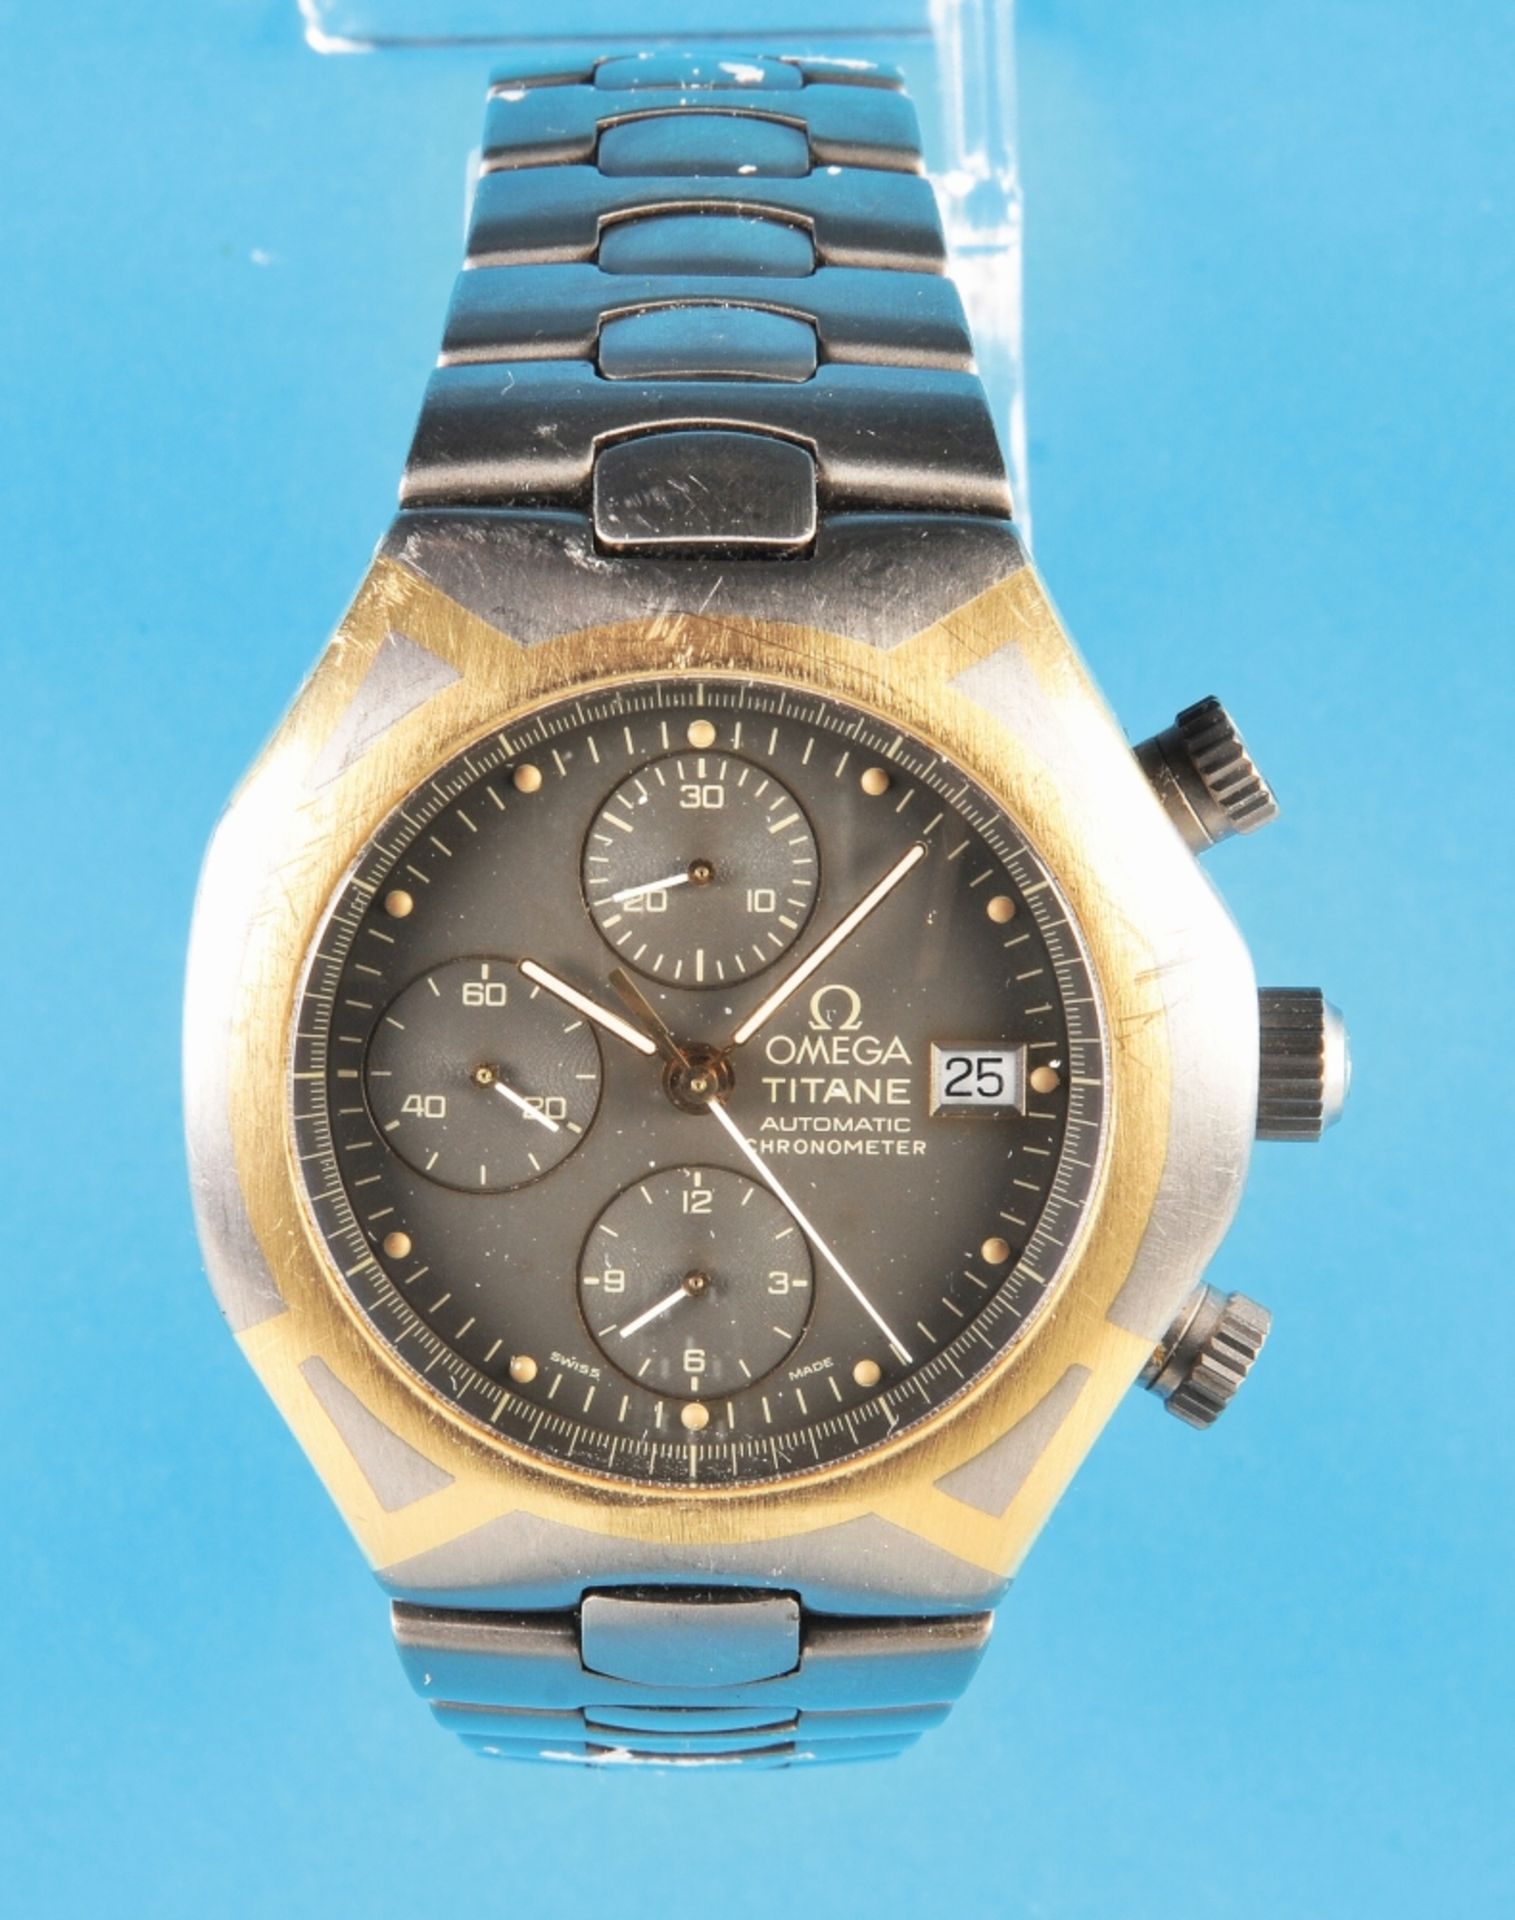 Omega Seamaster Titane Automatic Chronometer 120 m Polaris wristwatch with chronograph, 30-minute an